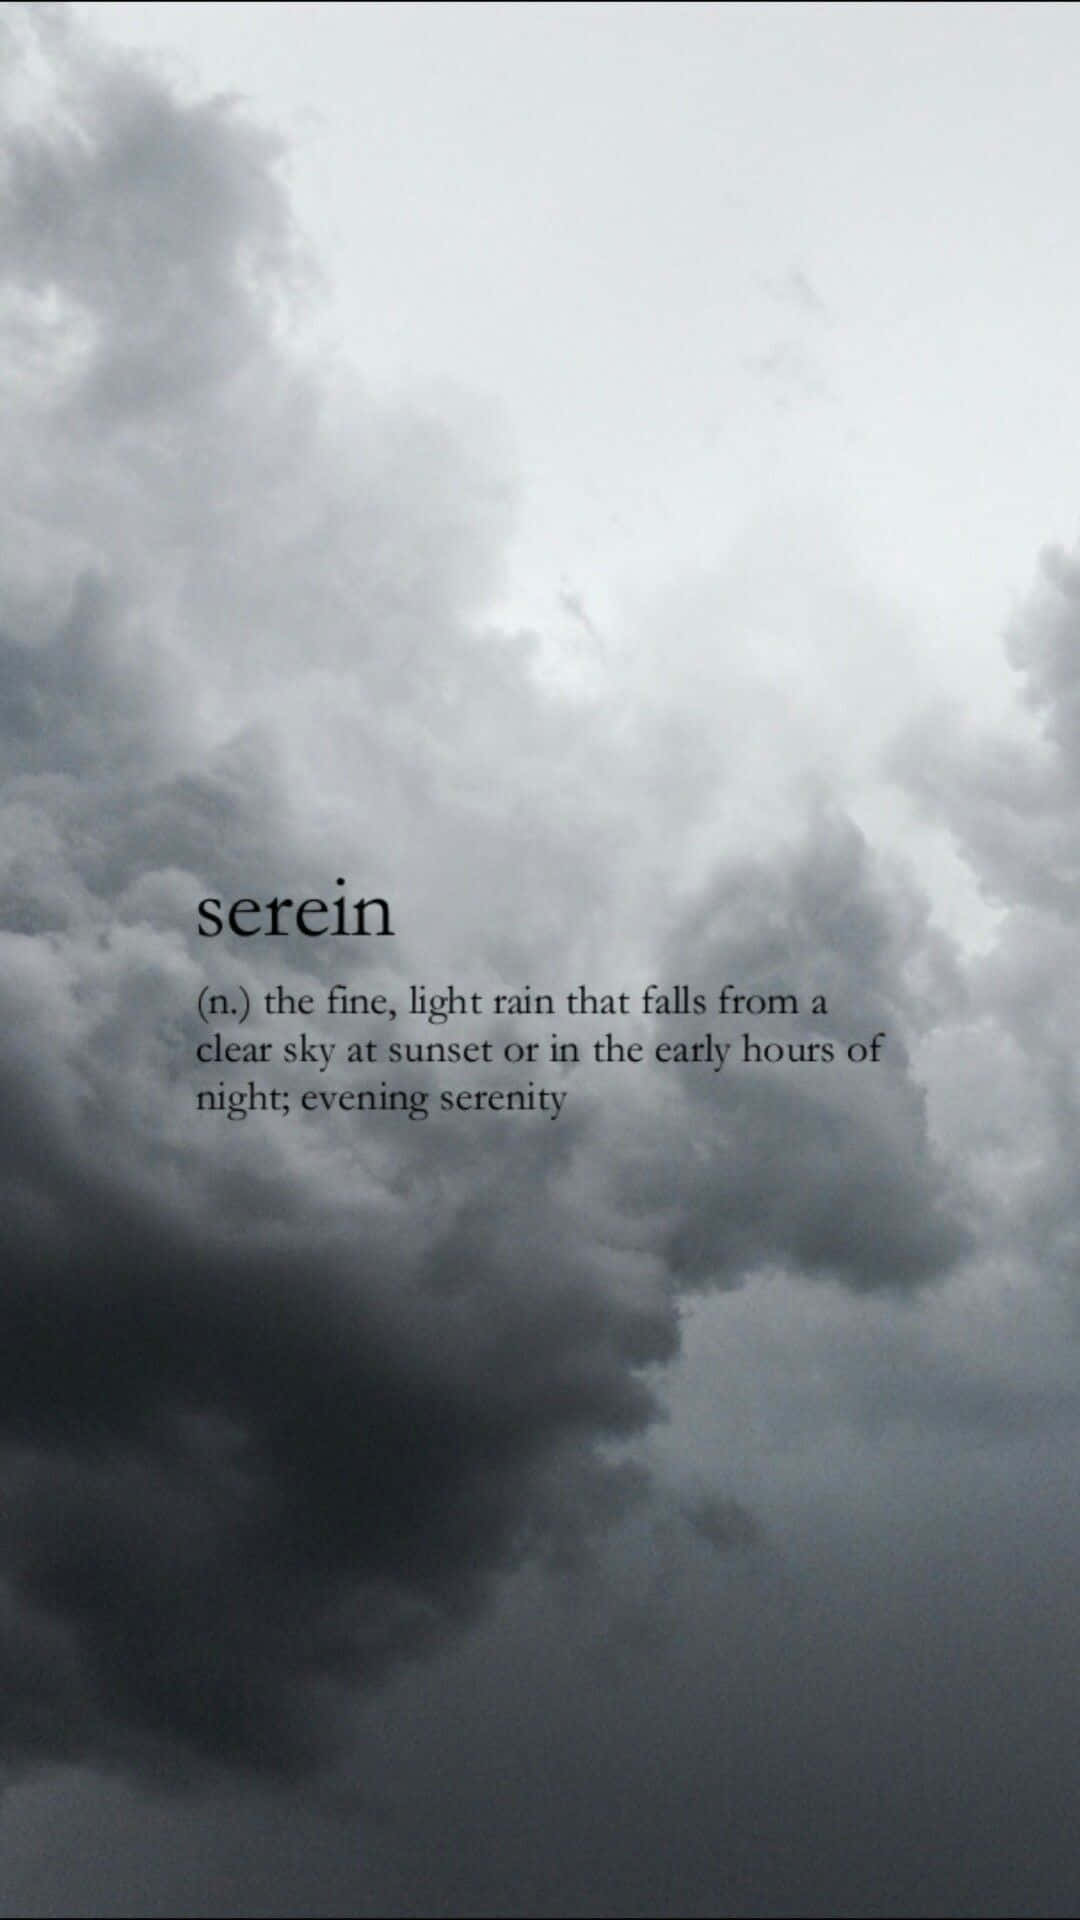 Serena - A Dark Sky With Clouds